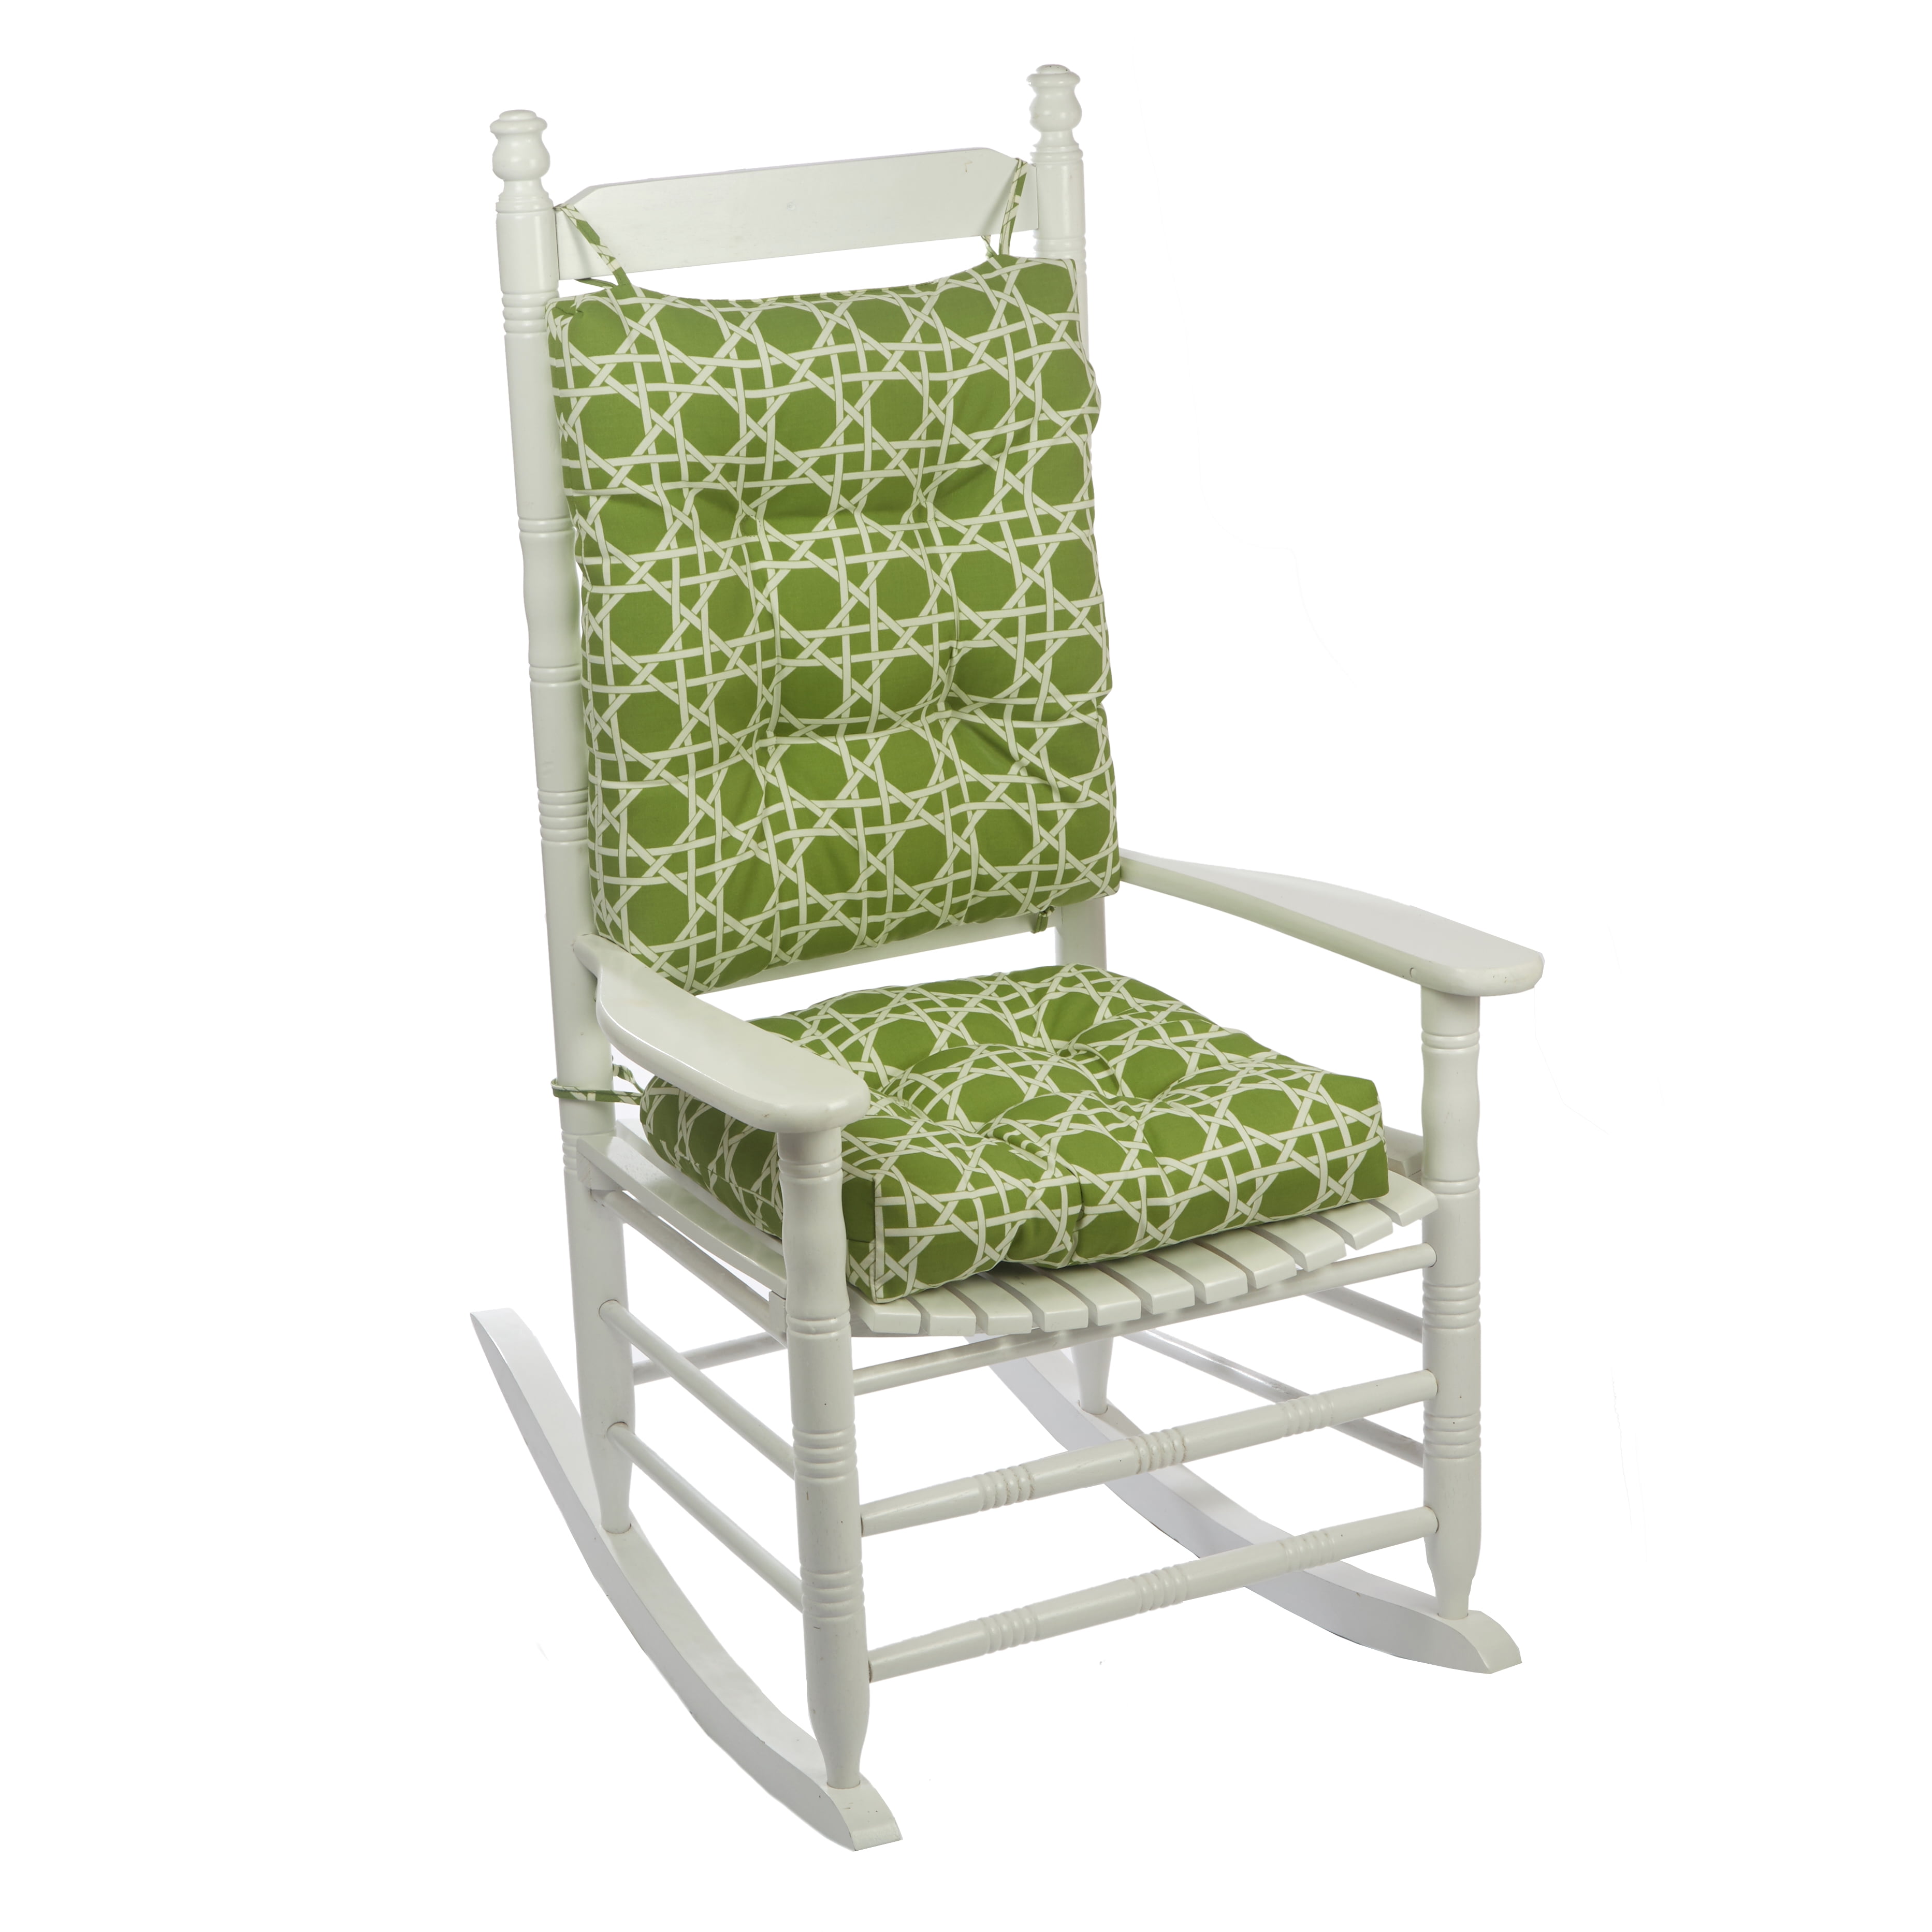 Kane Palm Rocking Chair Cushion Set, Cushions For Porch Rocking Chairs